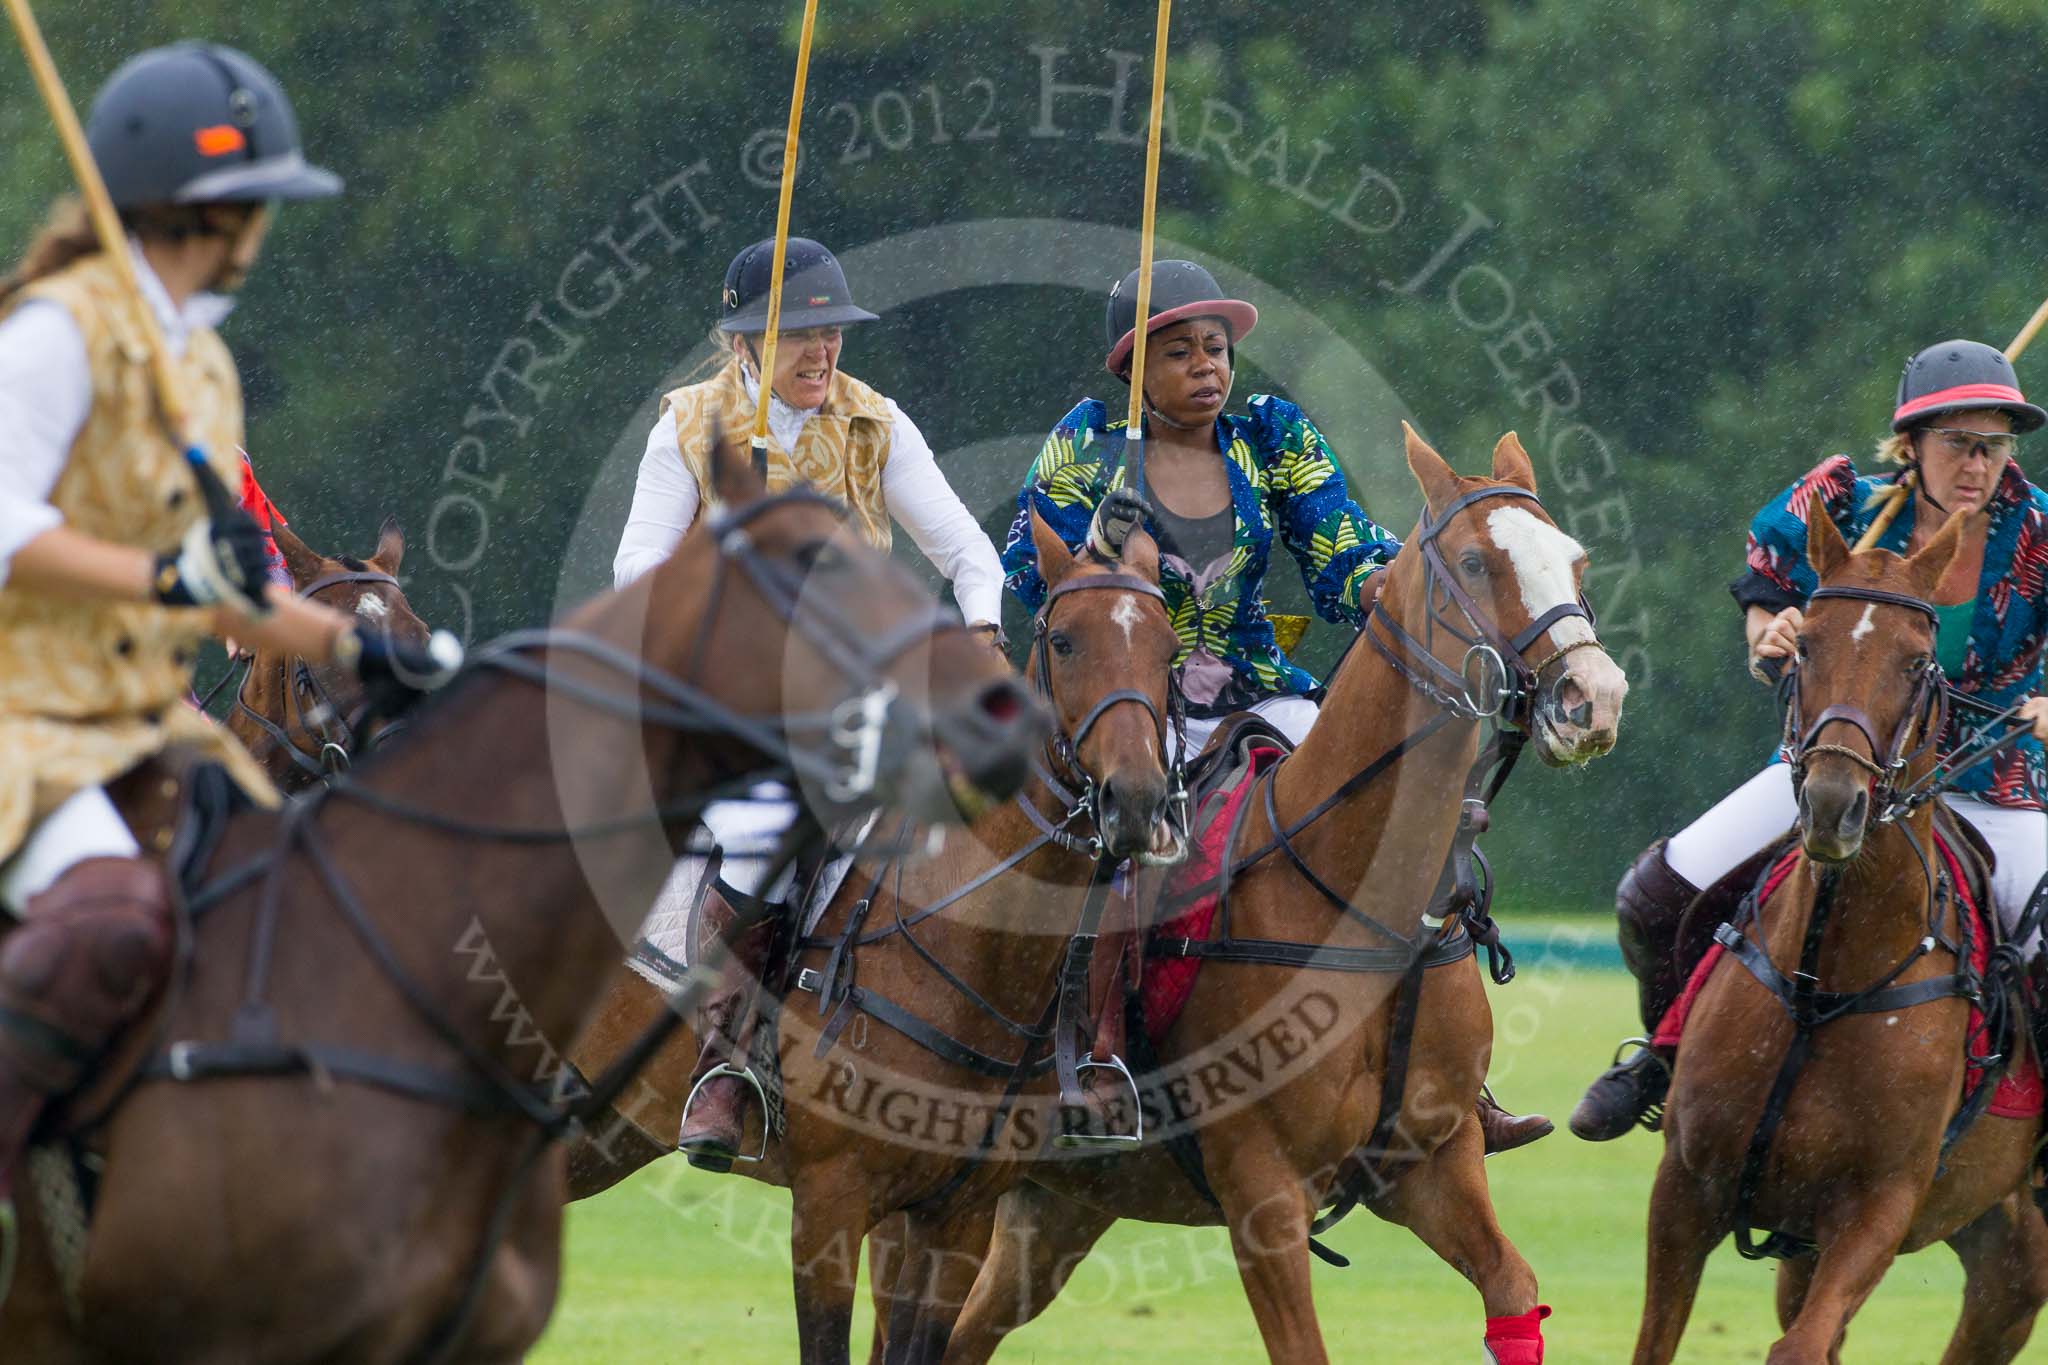 7th Heritage Polo Cup semi-finals: Uneku Atawodi from Nigeria wearing Nigerian Fashion Design DZNY, AMG PETROENERGY Polo Team..
Hurtwood Park Polo Club,
Ewhurst Green,
Surrey,
United Kingdom,
on 04 August 2012 at 14:04, image #195